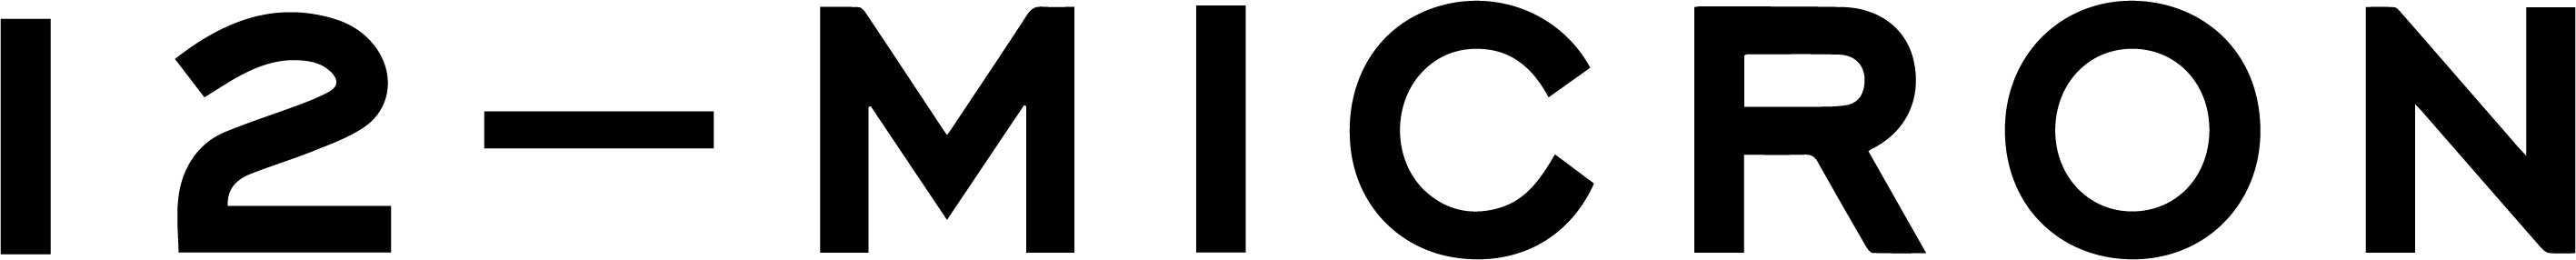 12-Micron logo